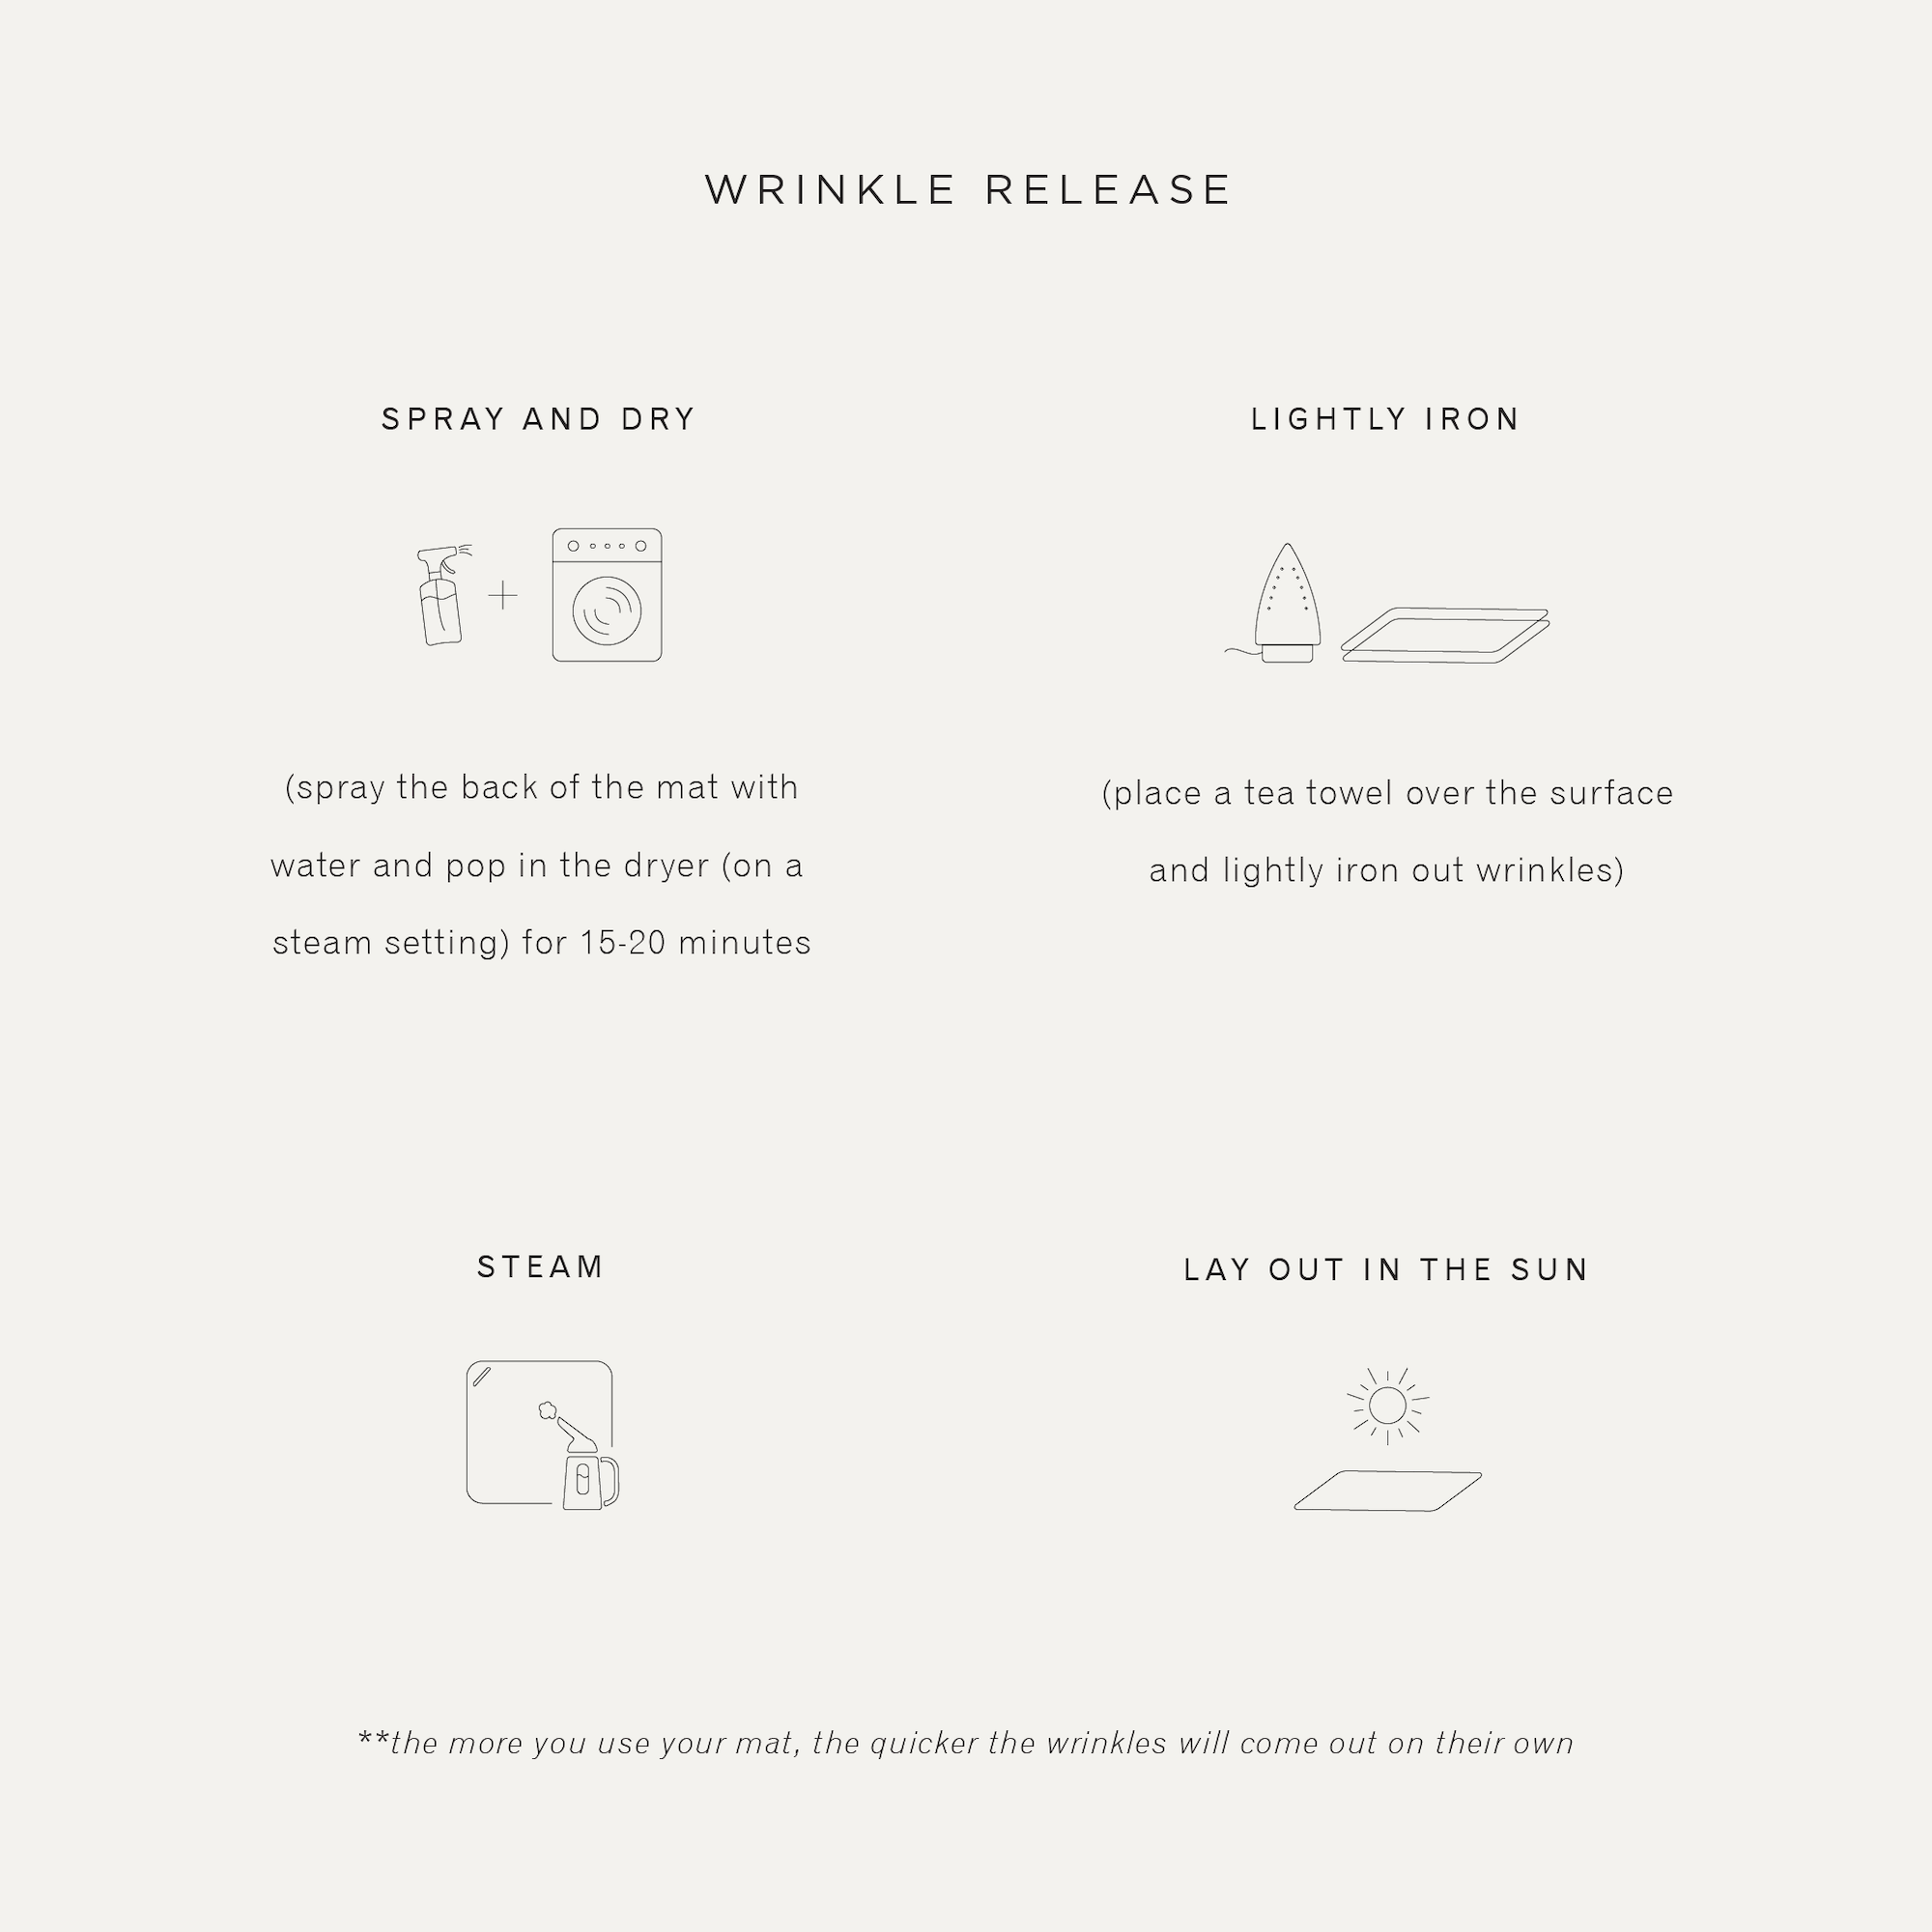 All@Wrinkle release info